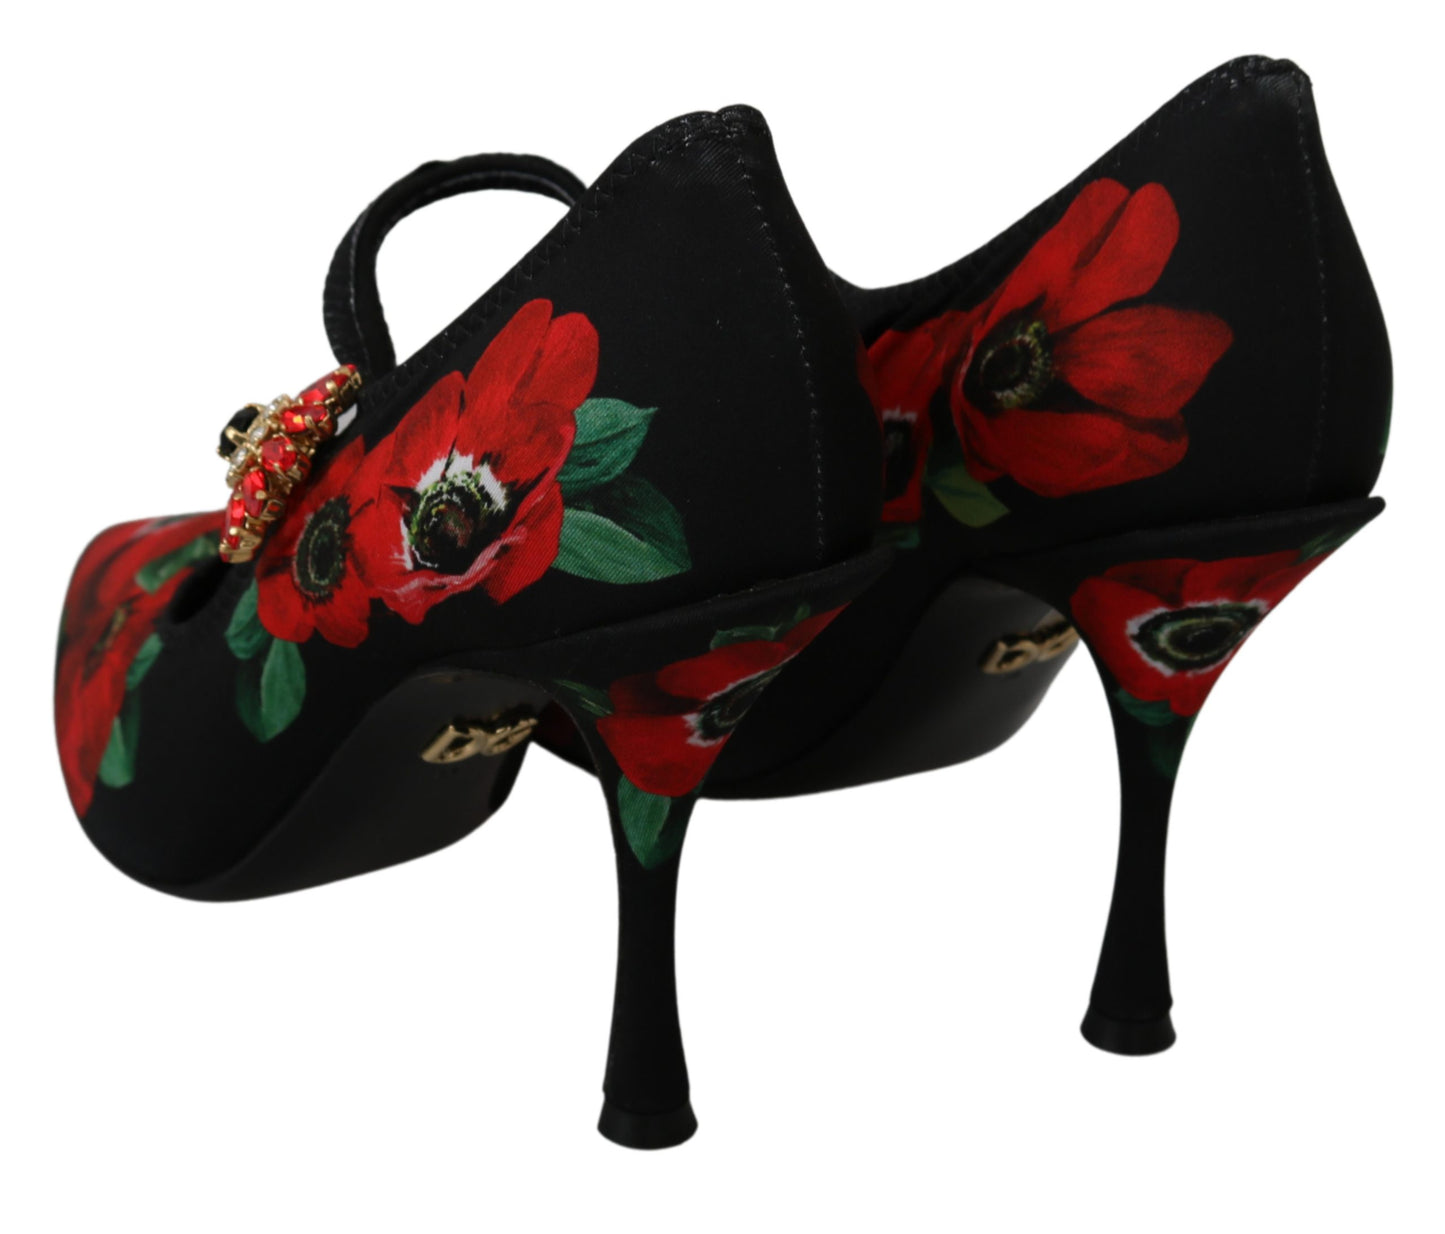 Dolce & Gabbana Black Red Floral Mary Janes Pumps Shoes - DEA STILOSA MILANO